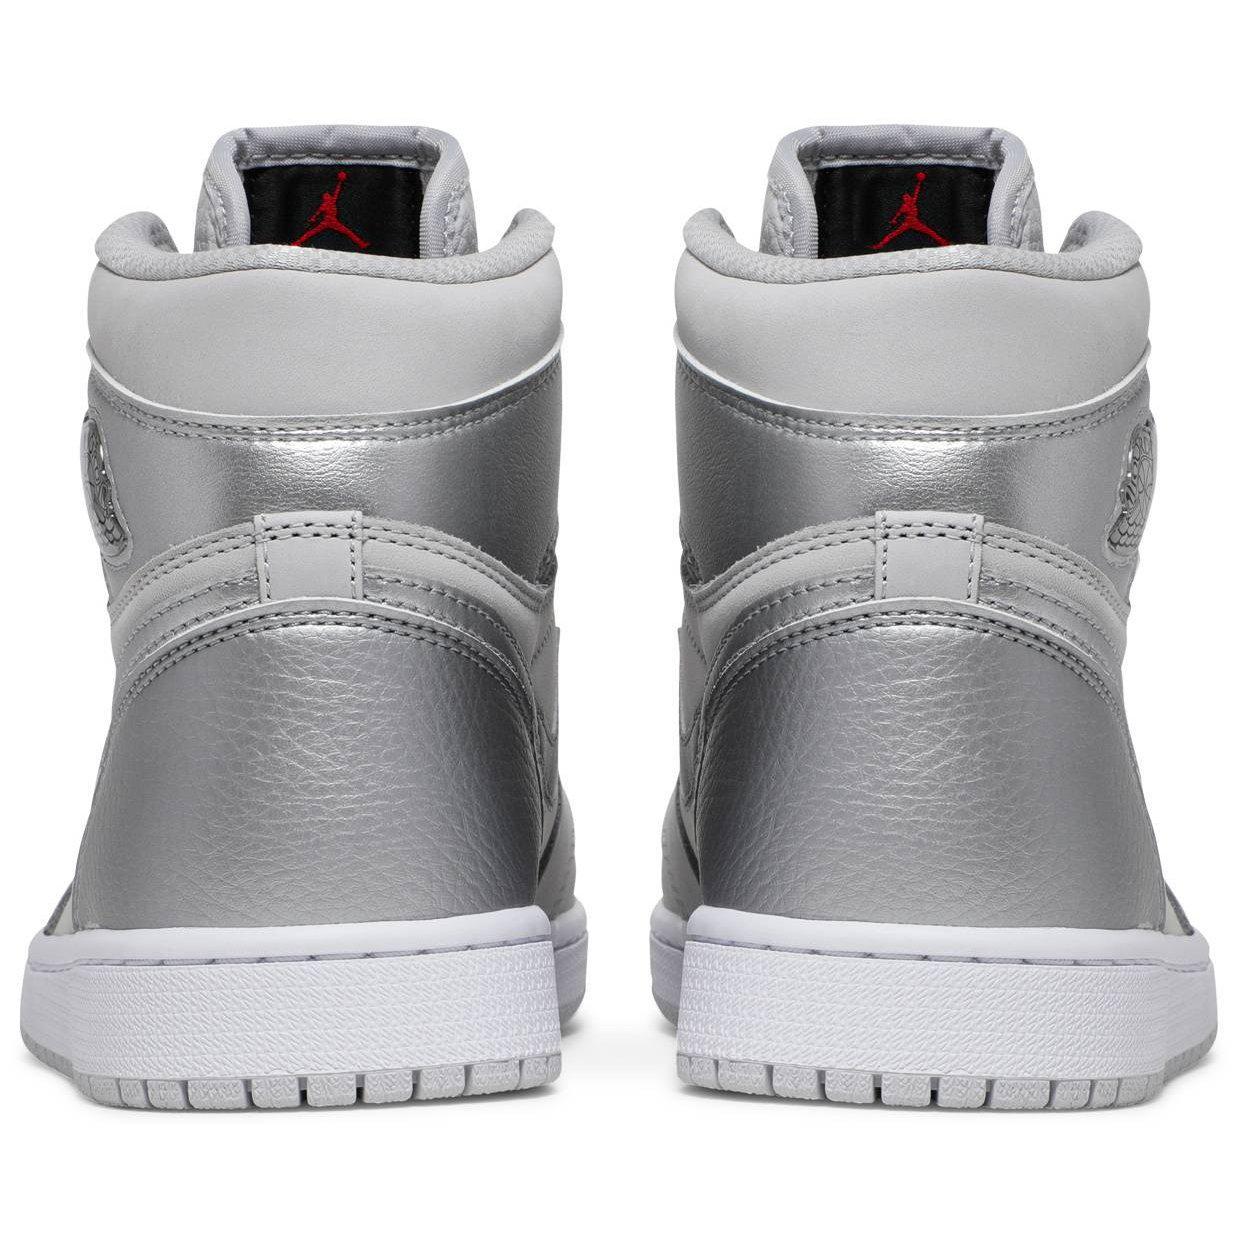 Buy Nike Air Jordan 1 Retro High OG CO.JP 'Tokyo' Online - Waves 